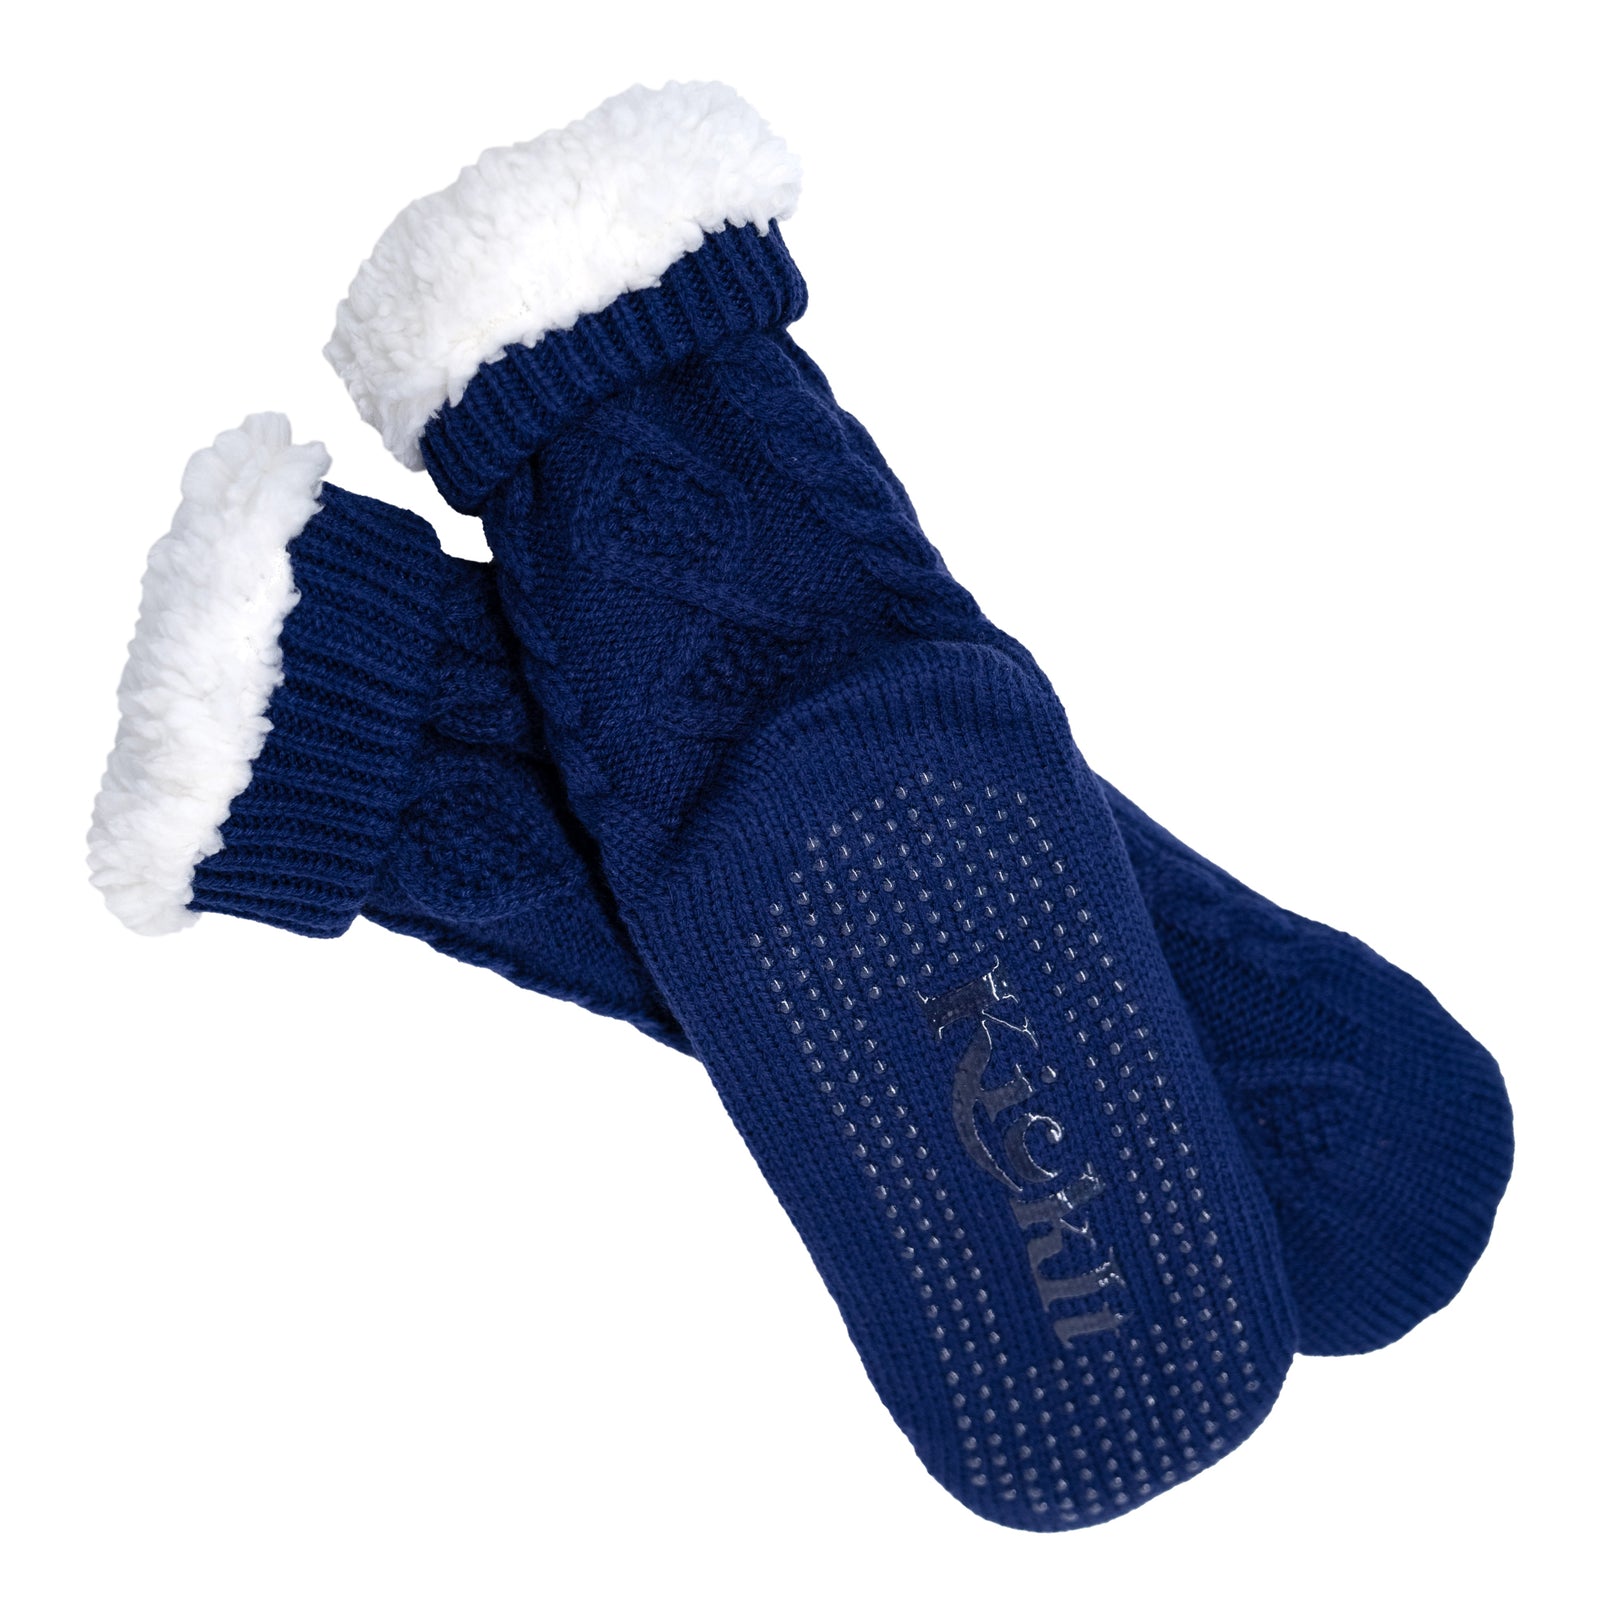 Navy Gripper Socks with Fleece Lining